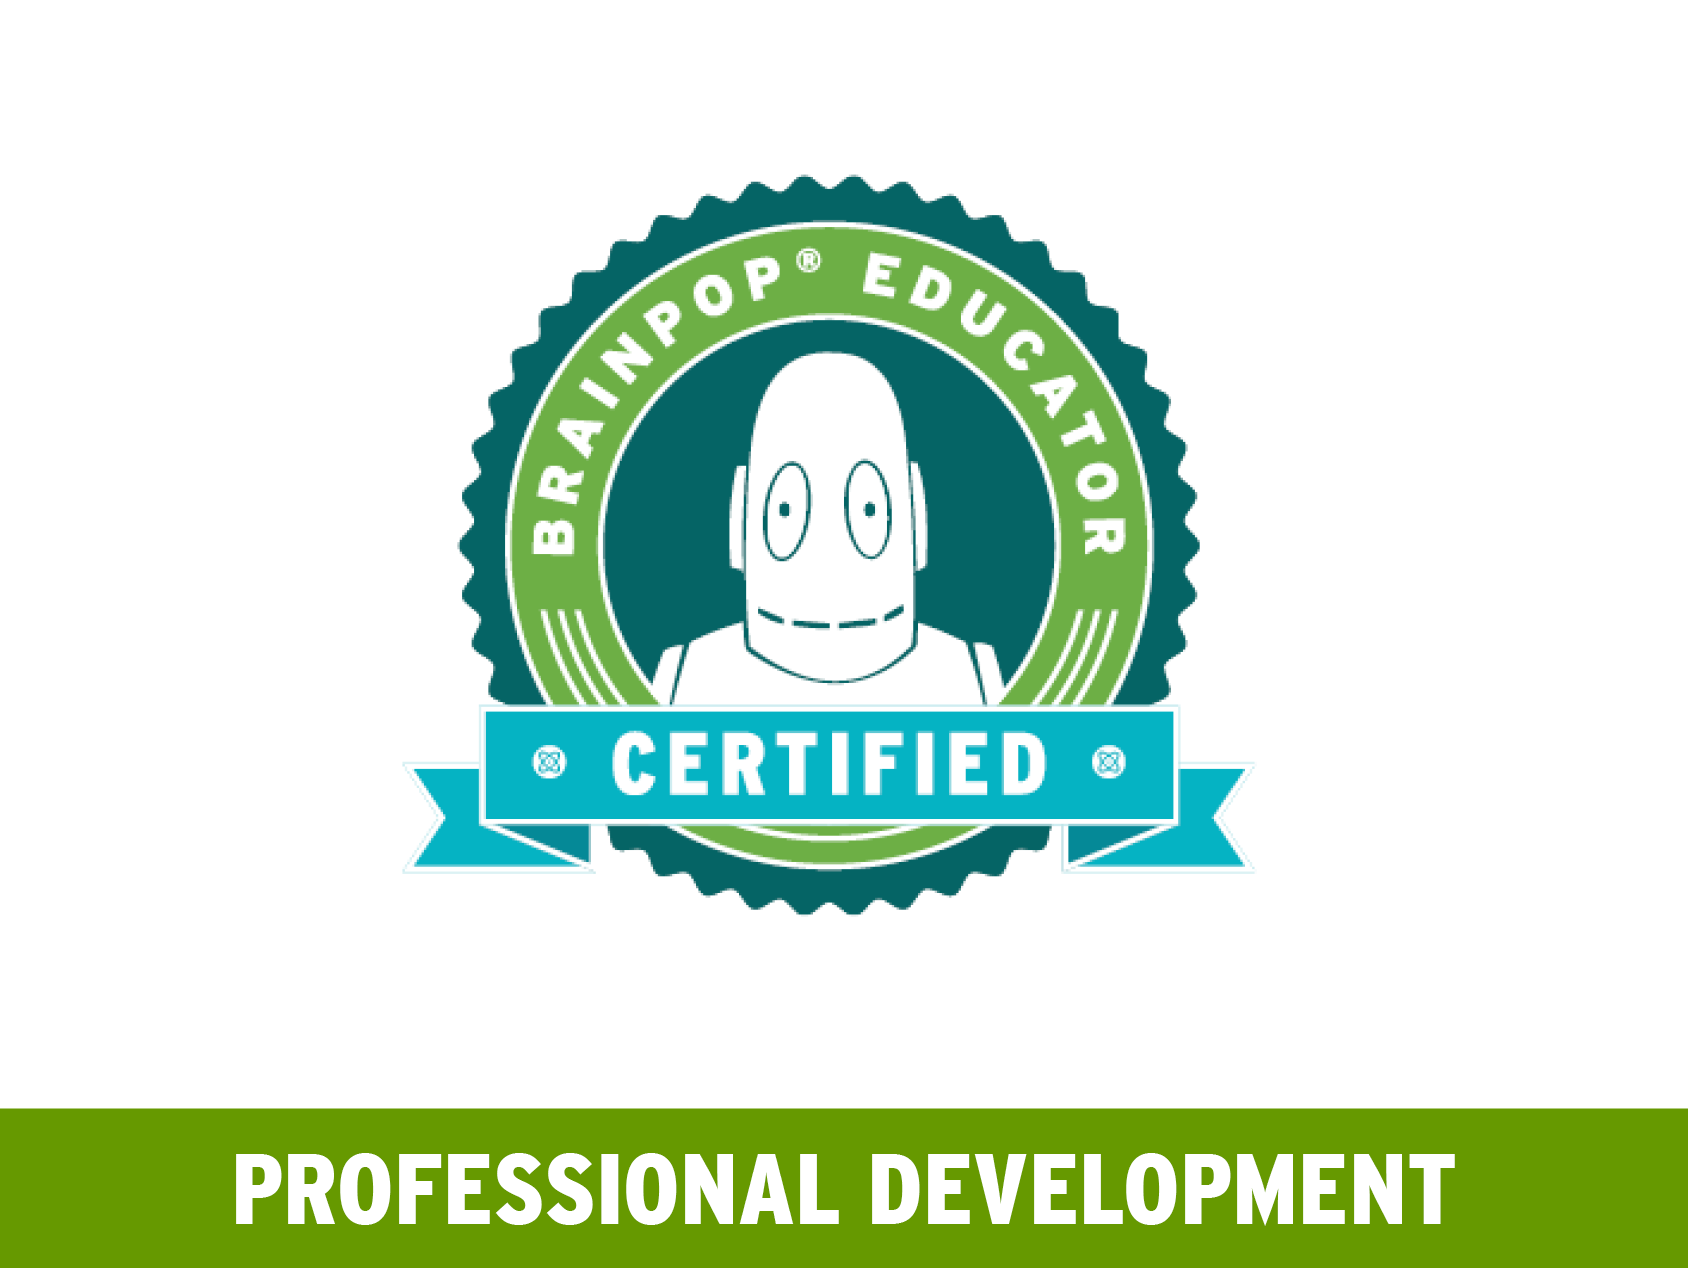 Apply to join the Certified BrainPOP Educator Program